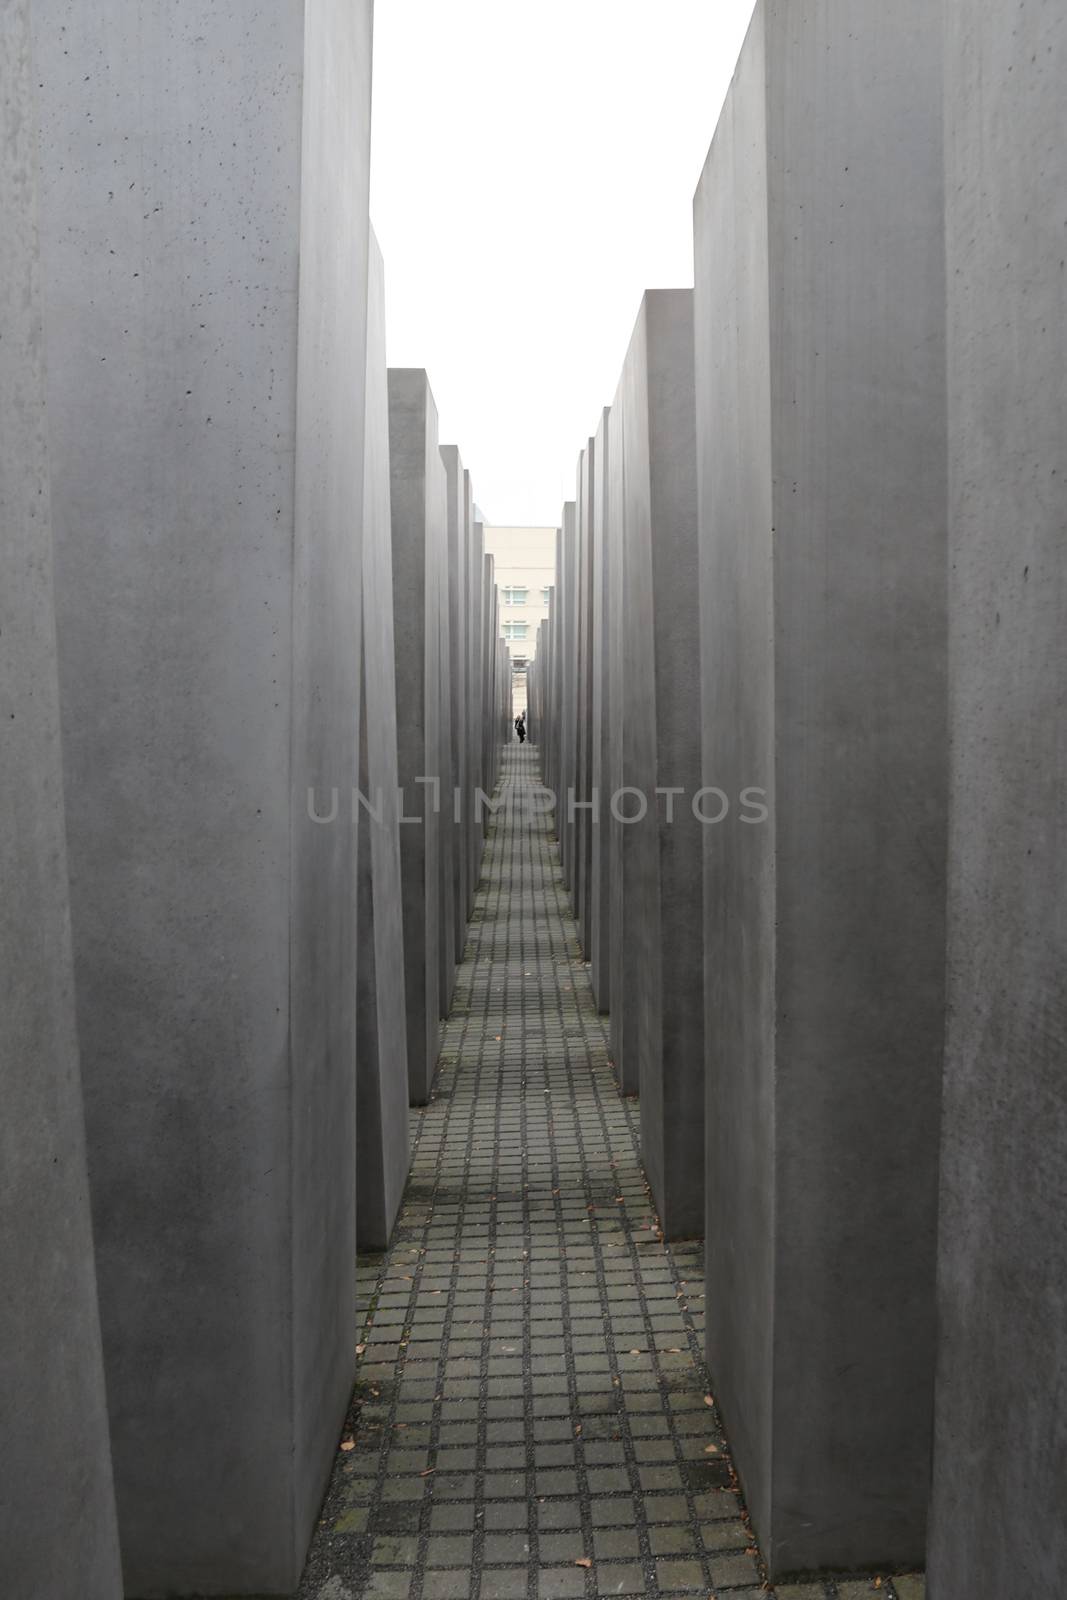 Holocaust Memorial - 02 by Kartouchken